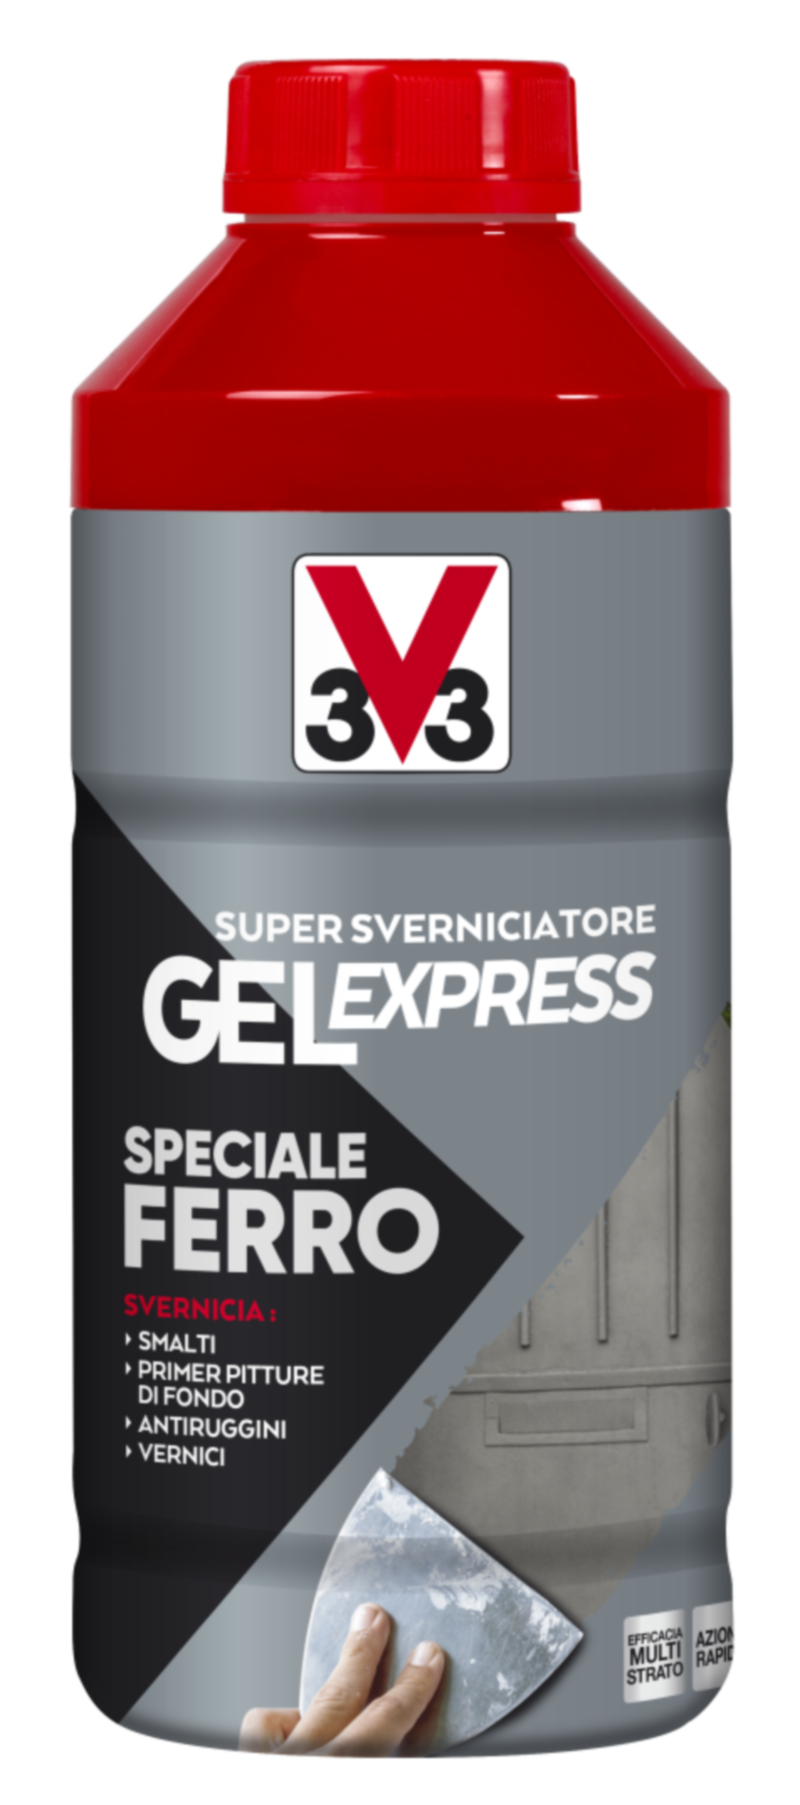 Sverniciatore Gel Express Speciale Ferro • V33 con agenti antiruggine